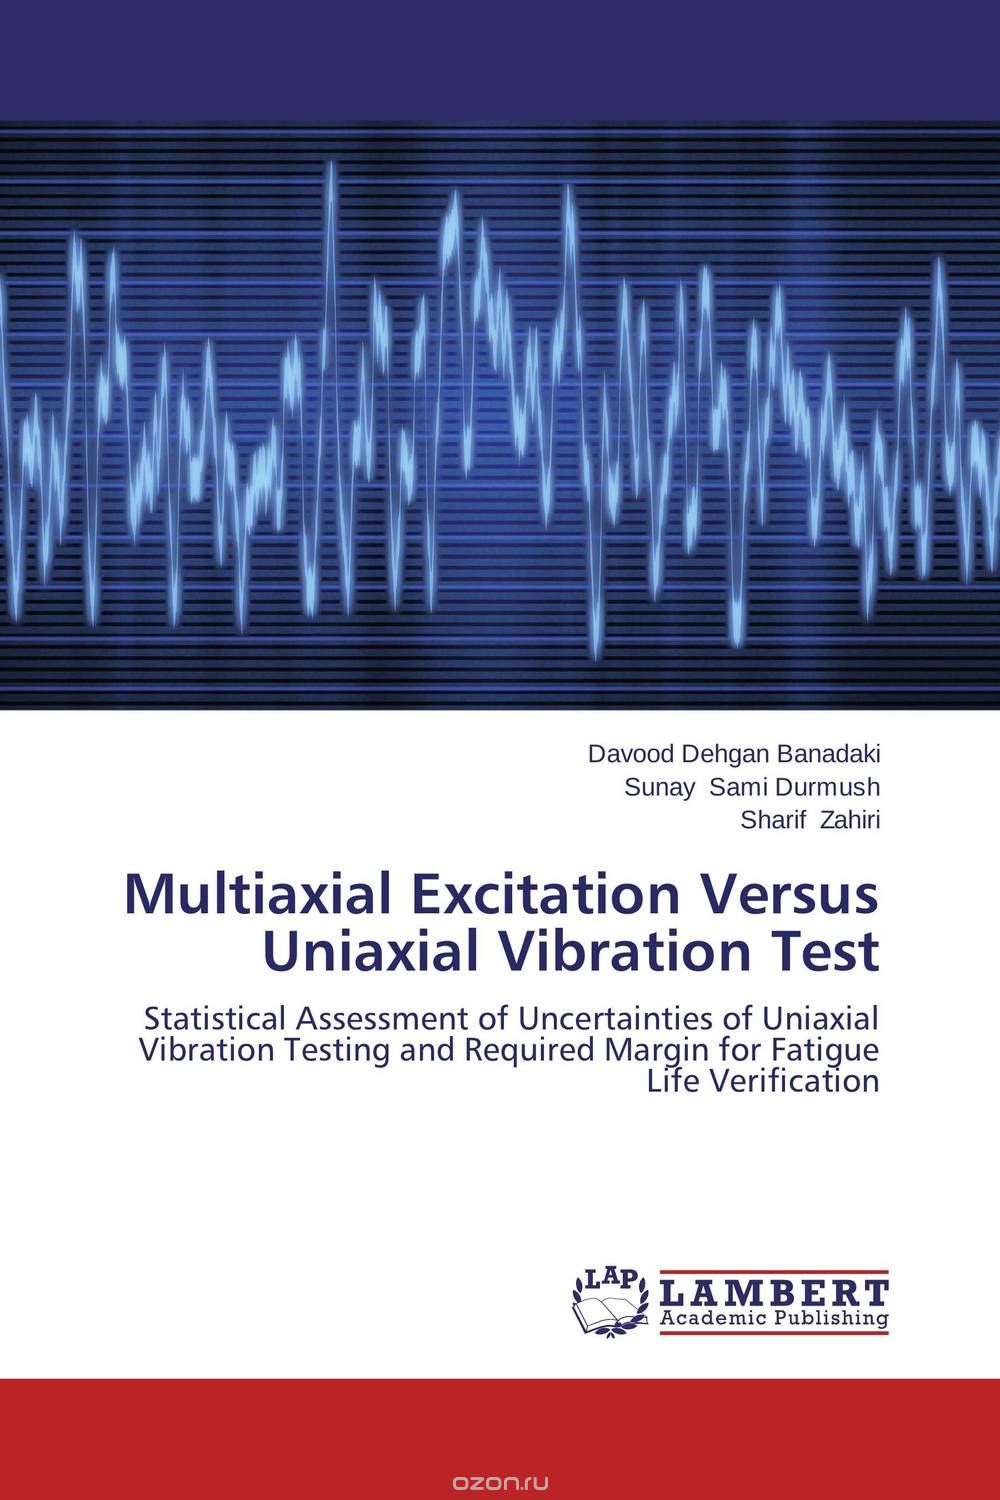 Multiaxial Excitation Versus Uniaxial Vibration Test